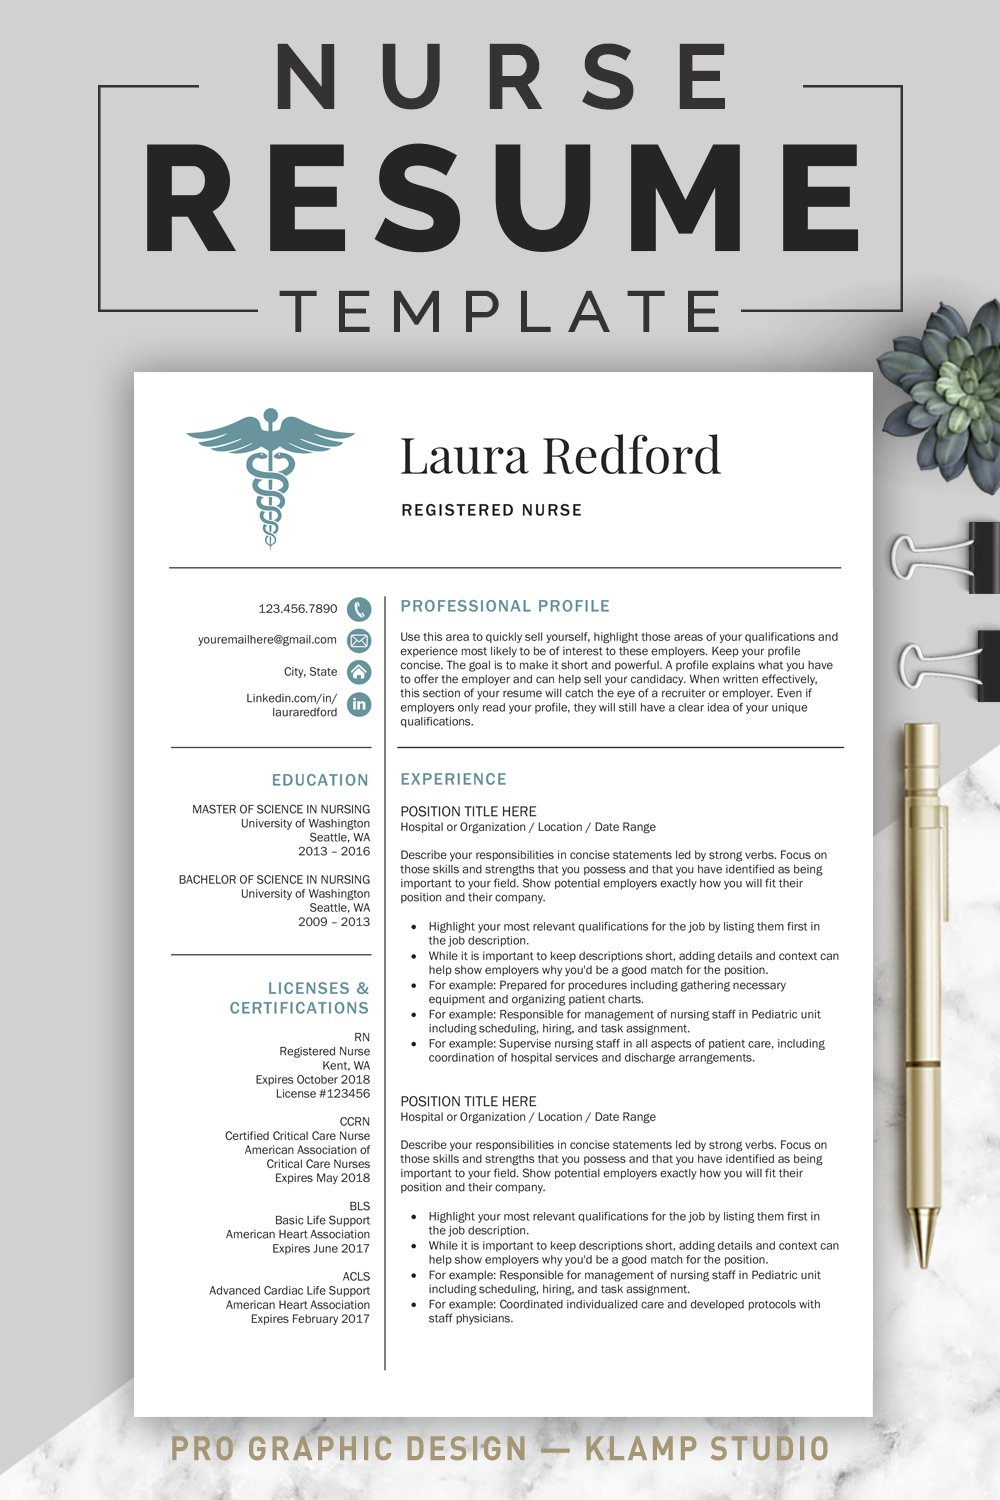 Professional nurse resume template for nurses.